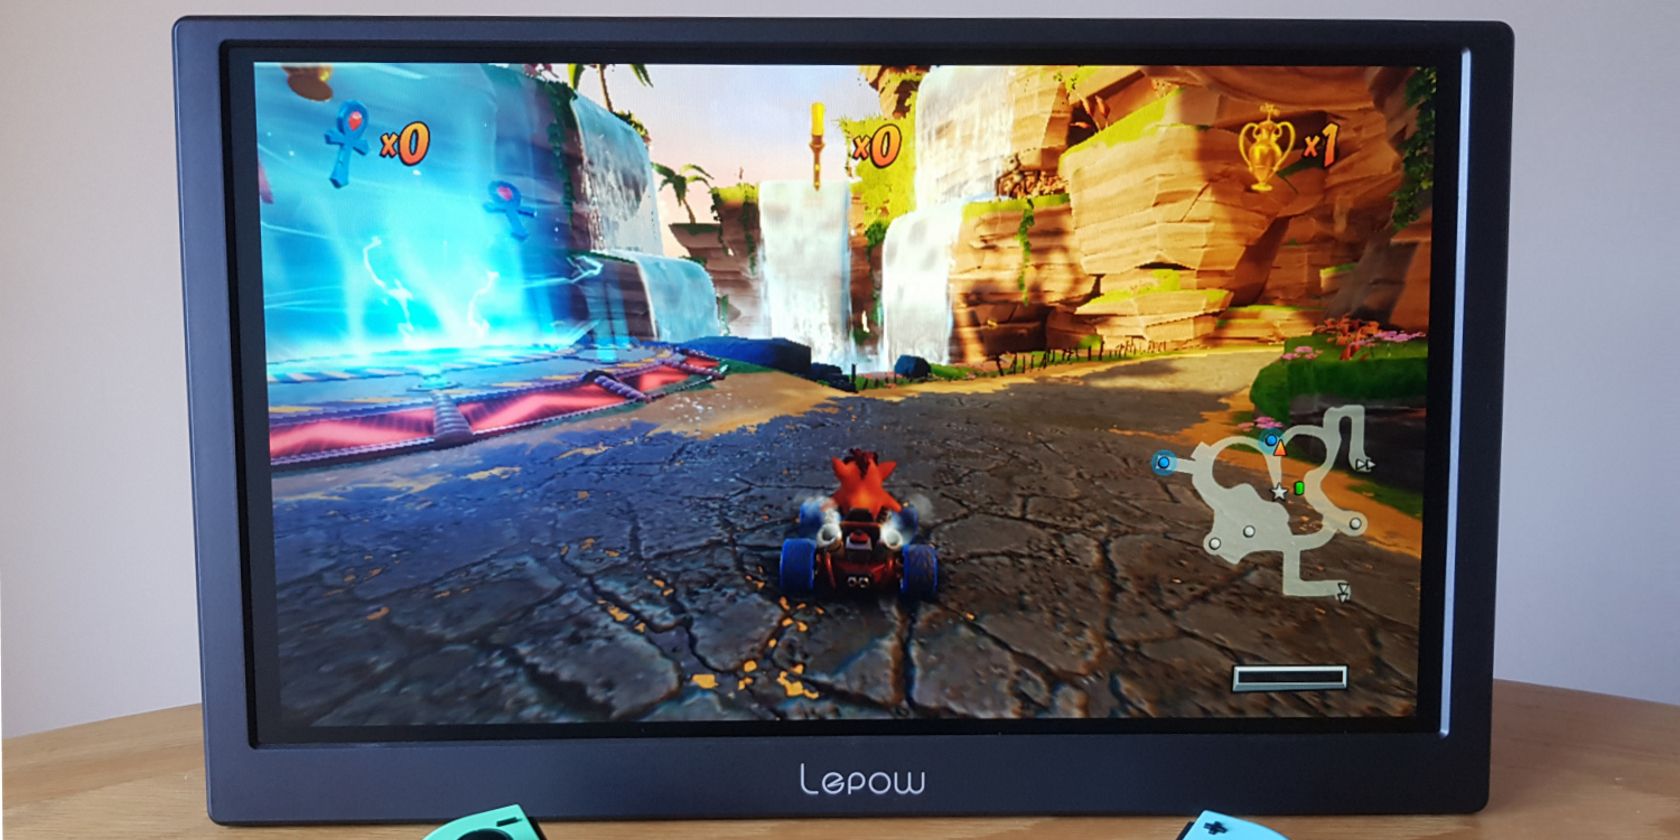 Lepow C2S - Displaying Nintendo Switch on screen